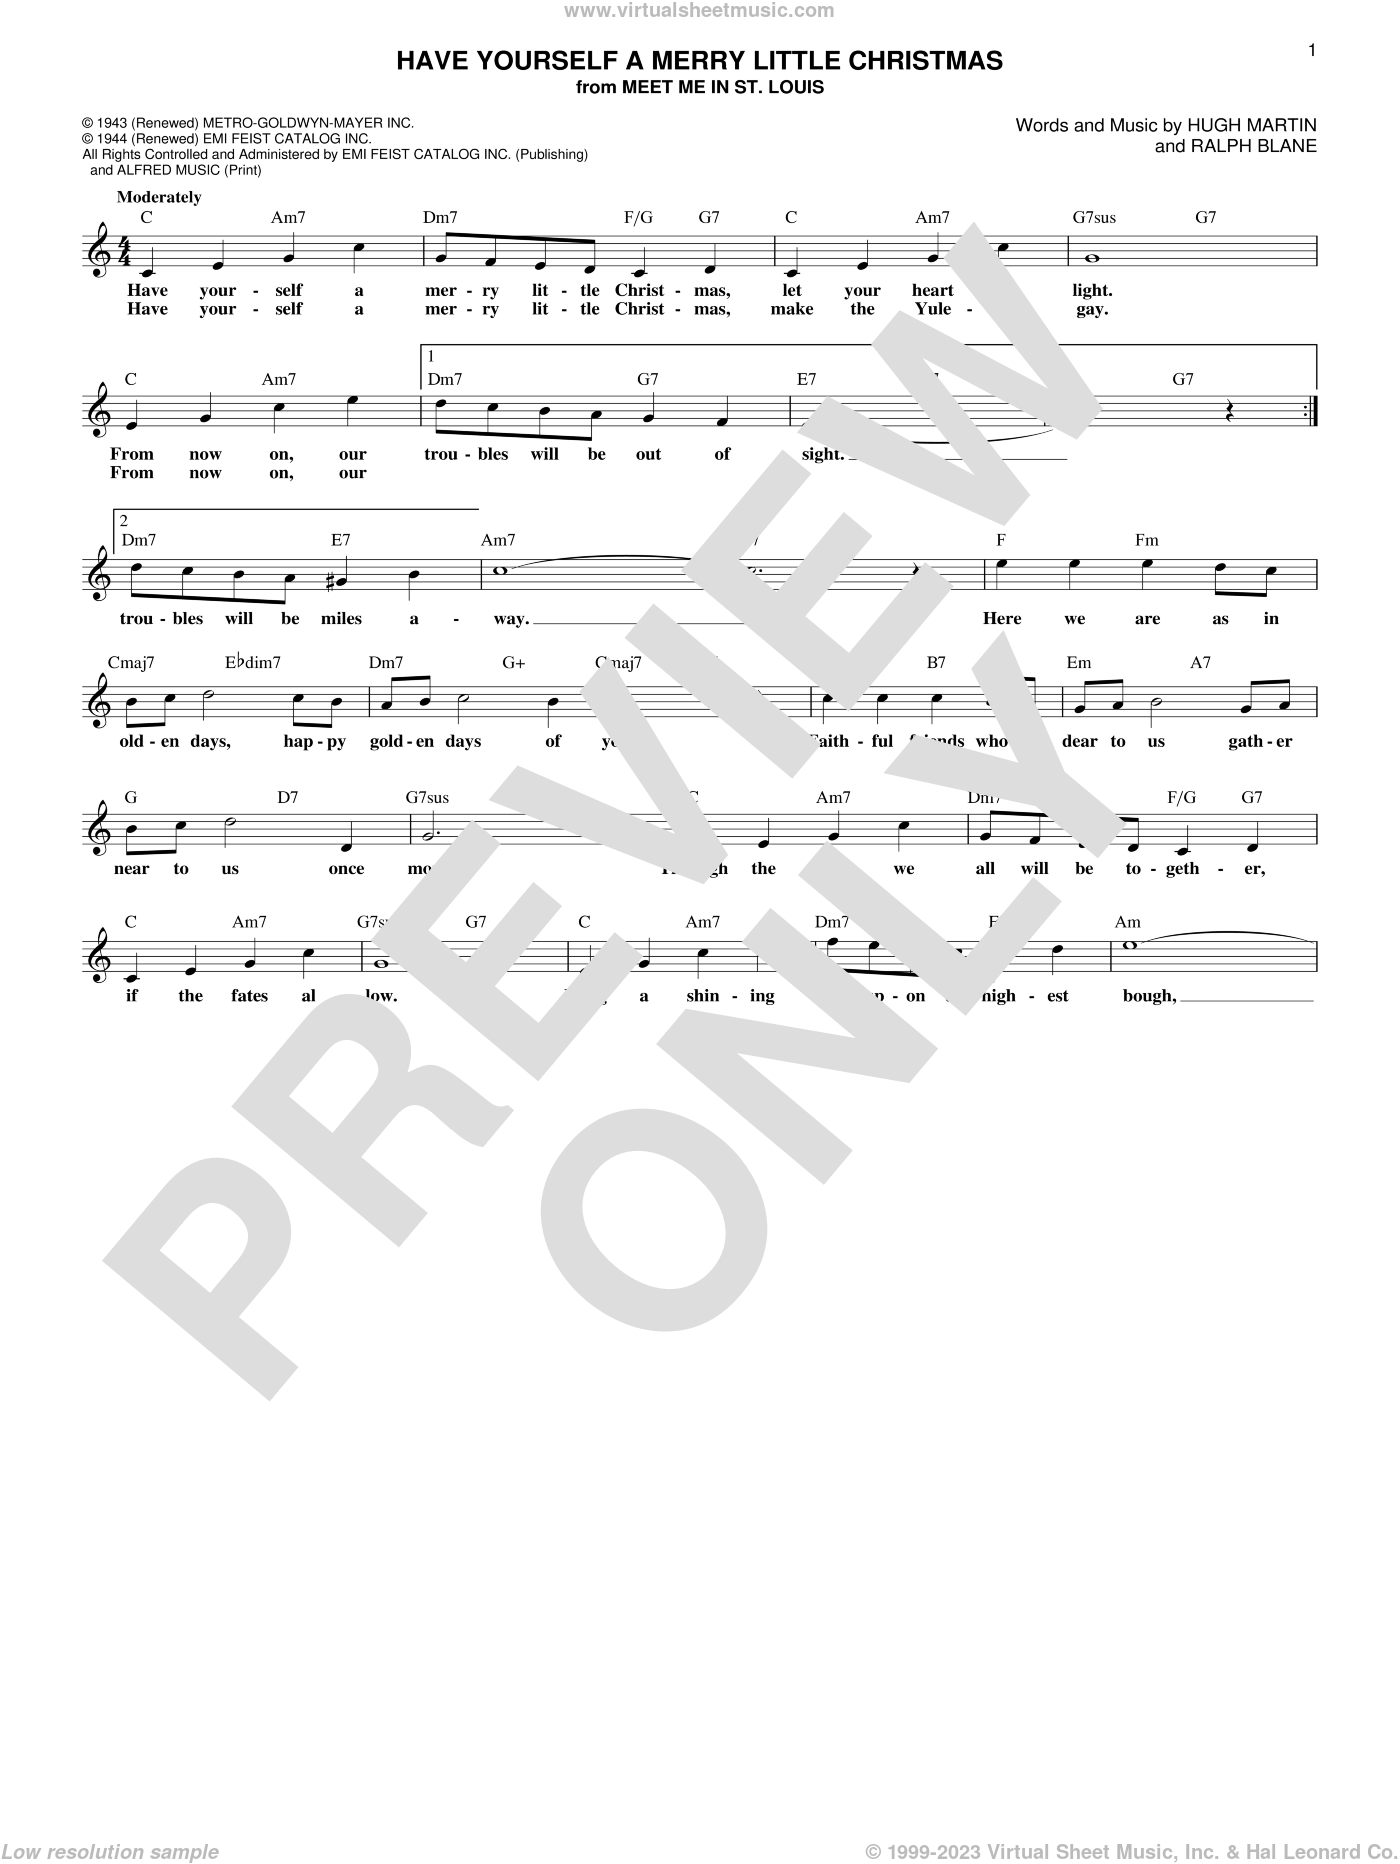 Sleigh Ride: E-flat Alto Saxophone: E-flat Alto Saxophone Part - Digital  Sheet Music Download